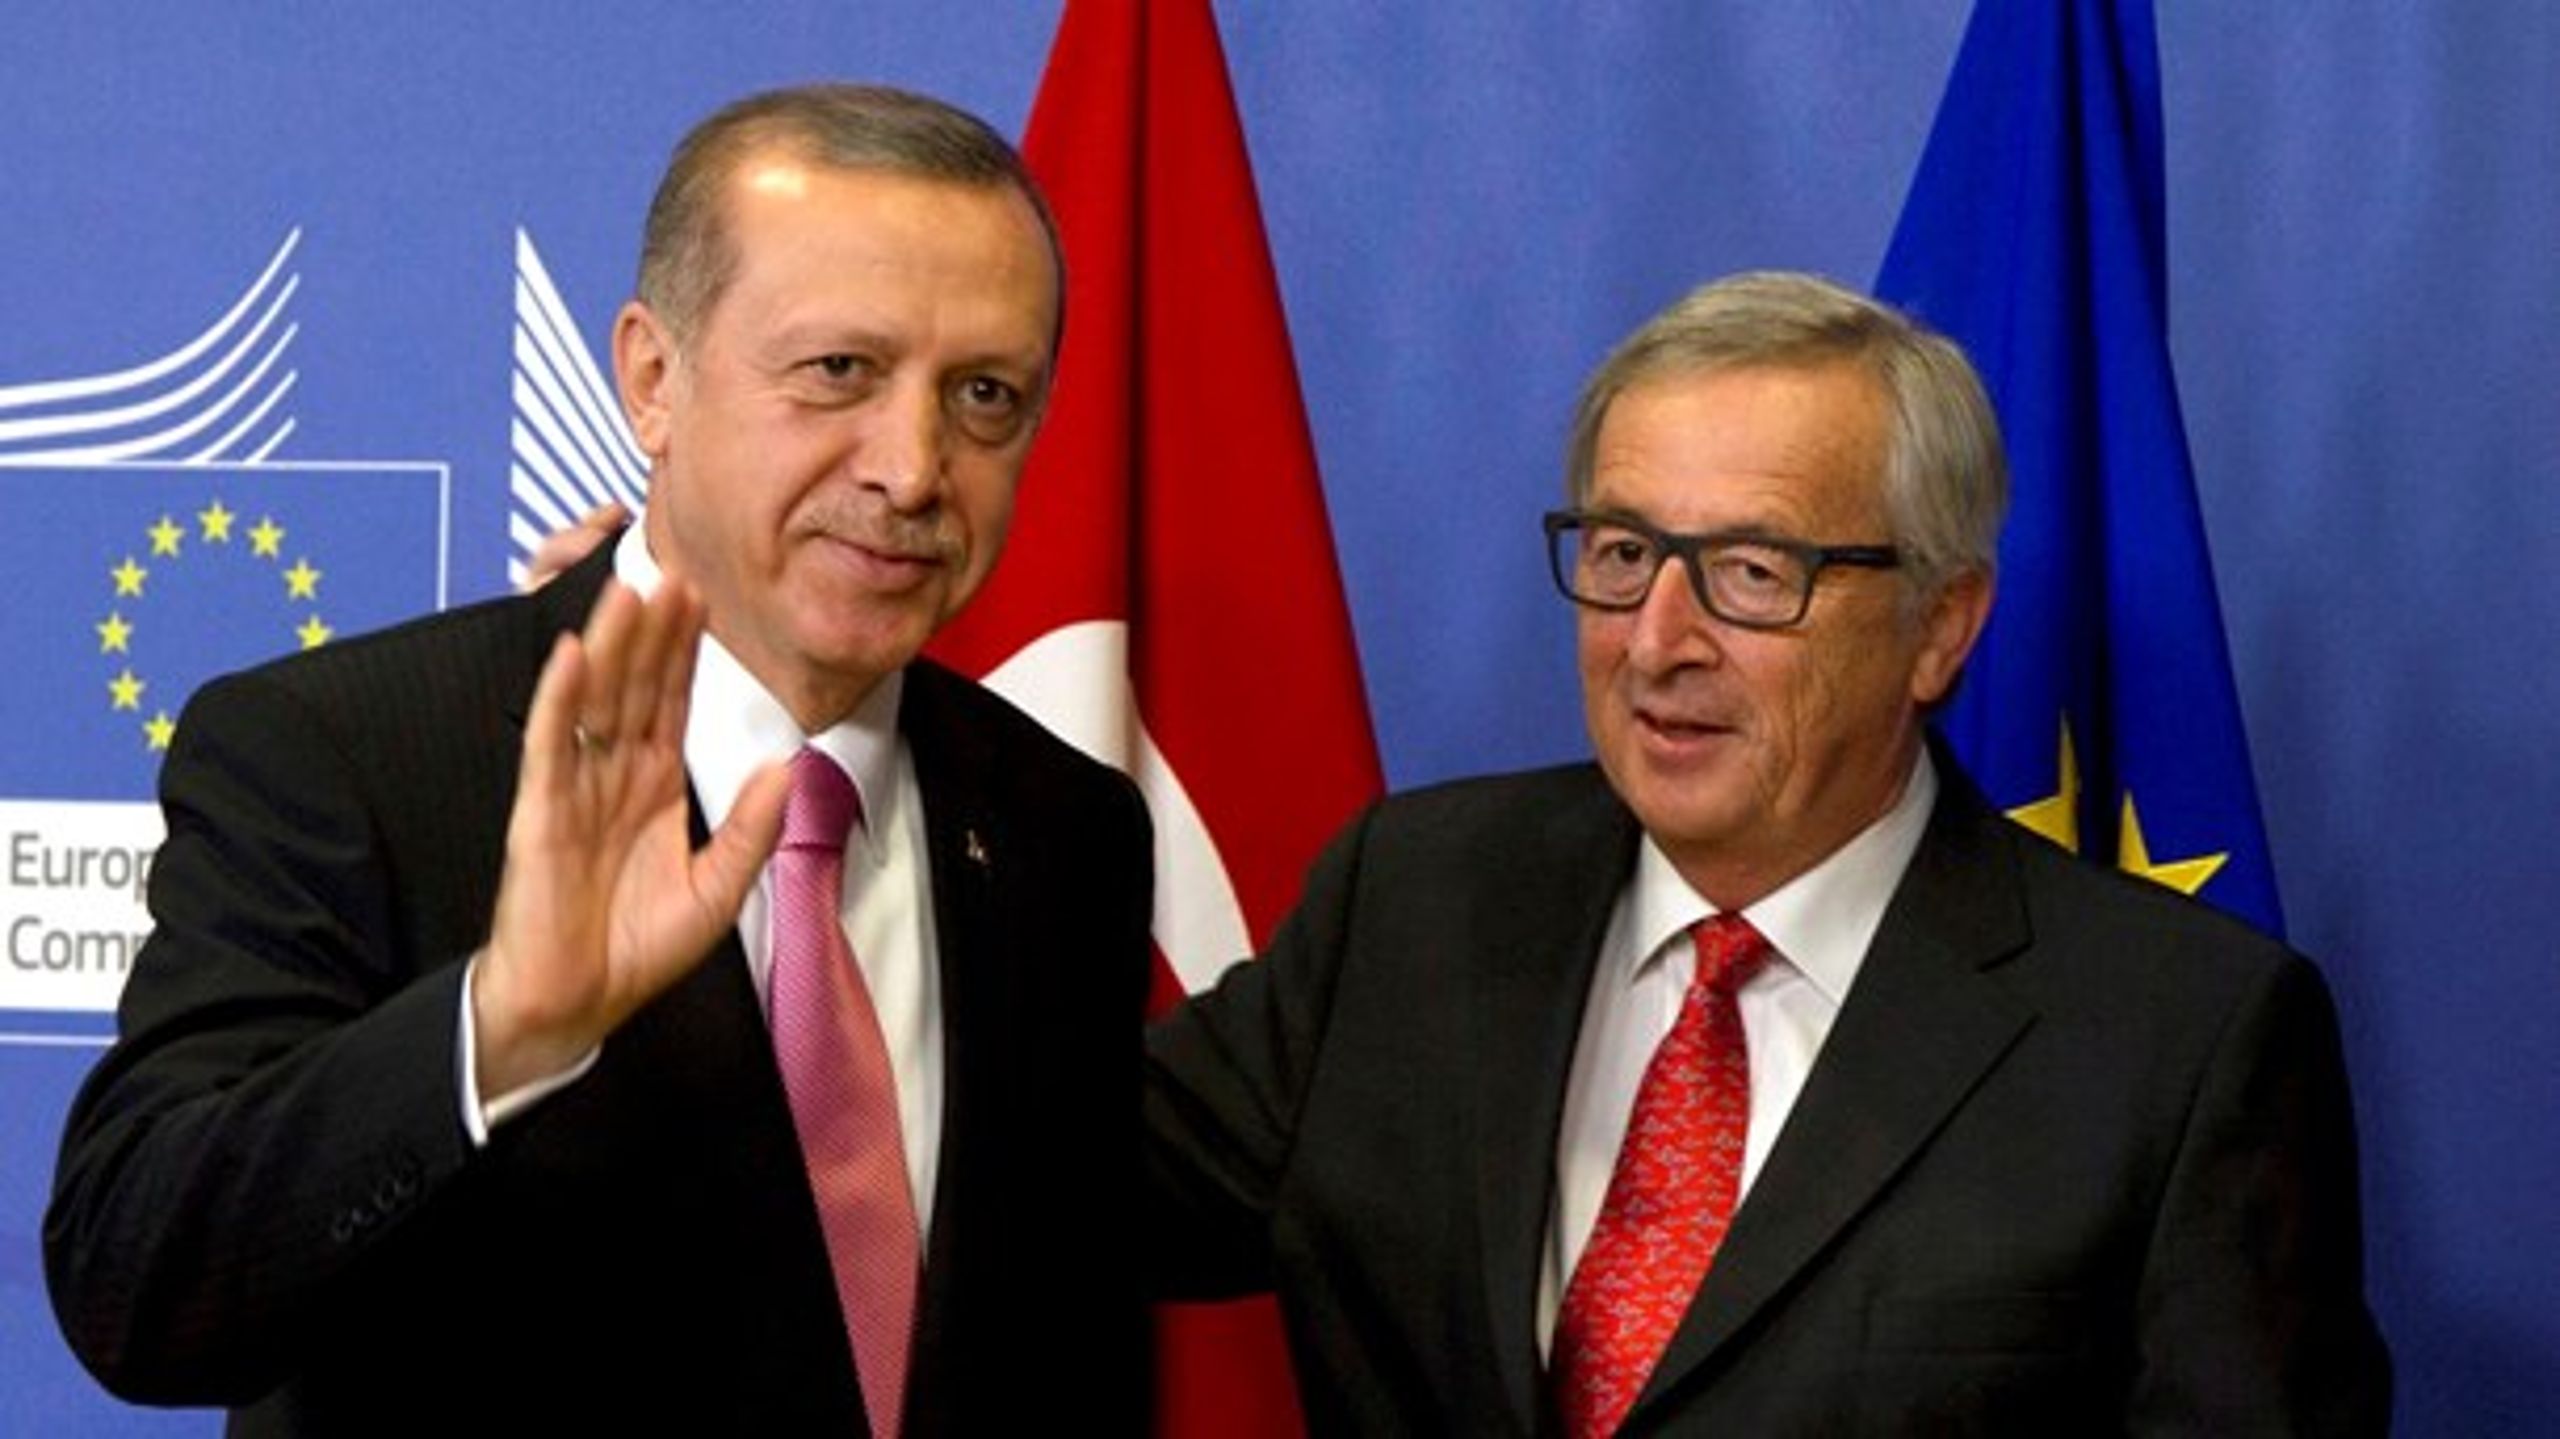 Tyrkiets præsident, Recep&nbsp;Tayyip&nbsp;Erdogan,
sammen med EU-Kommissionens formand,&nbsp;Jean-Claude&nbsp;Juncker,&nbsp;ved et
møde i Bruxelles i 2015.